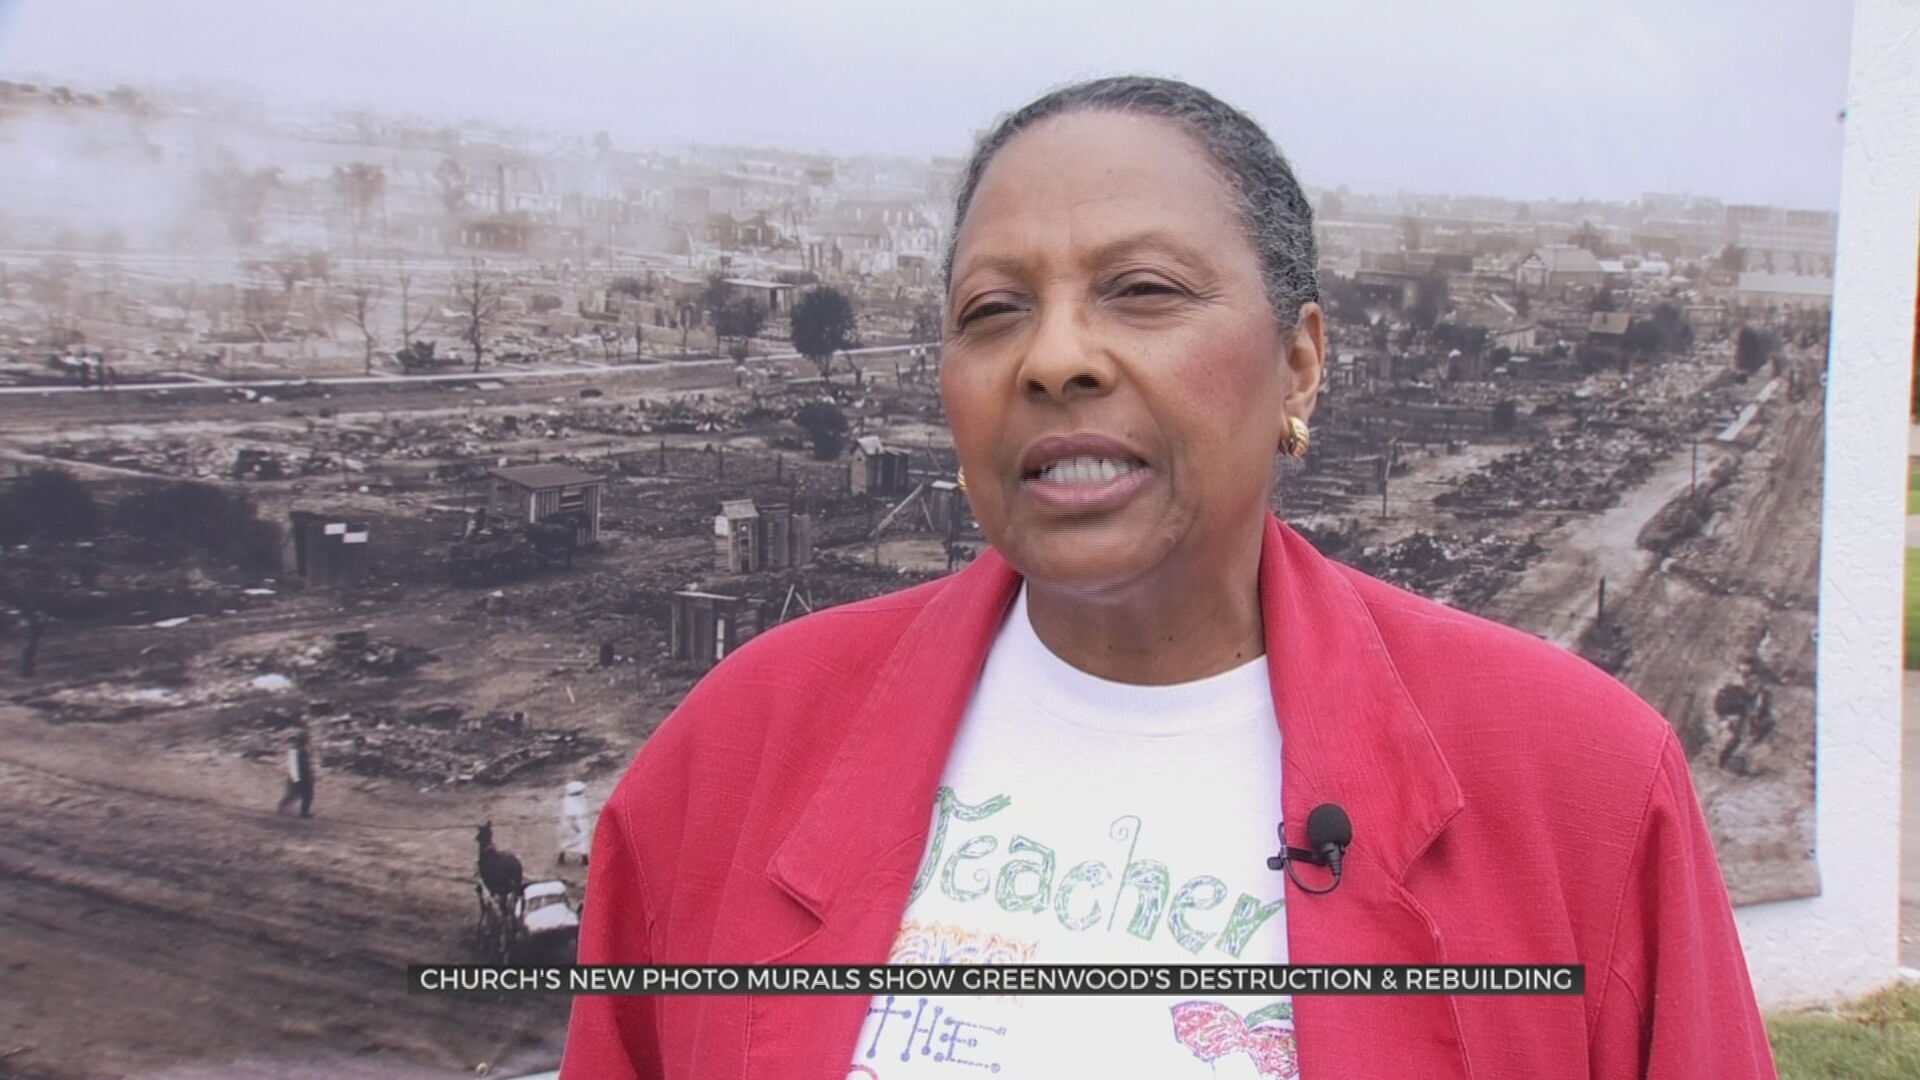 Tulsa’s Paradise Baptist Church Displaying Photo Murals Of Massacre To Show Destruction